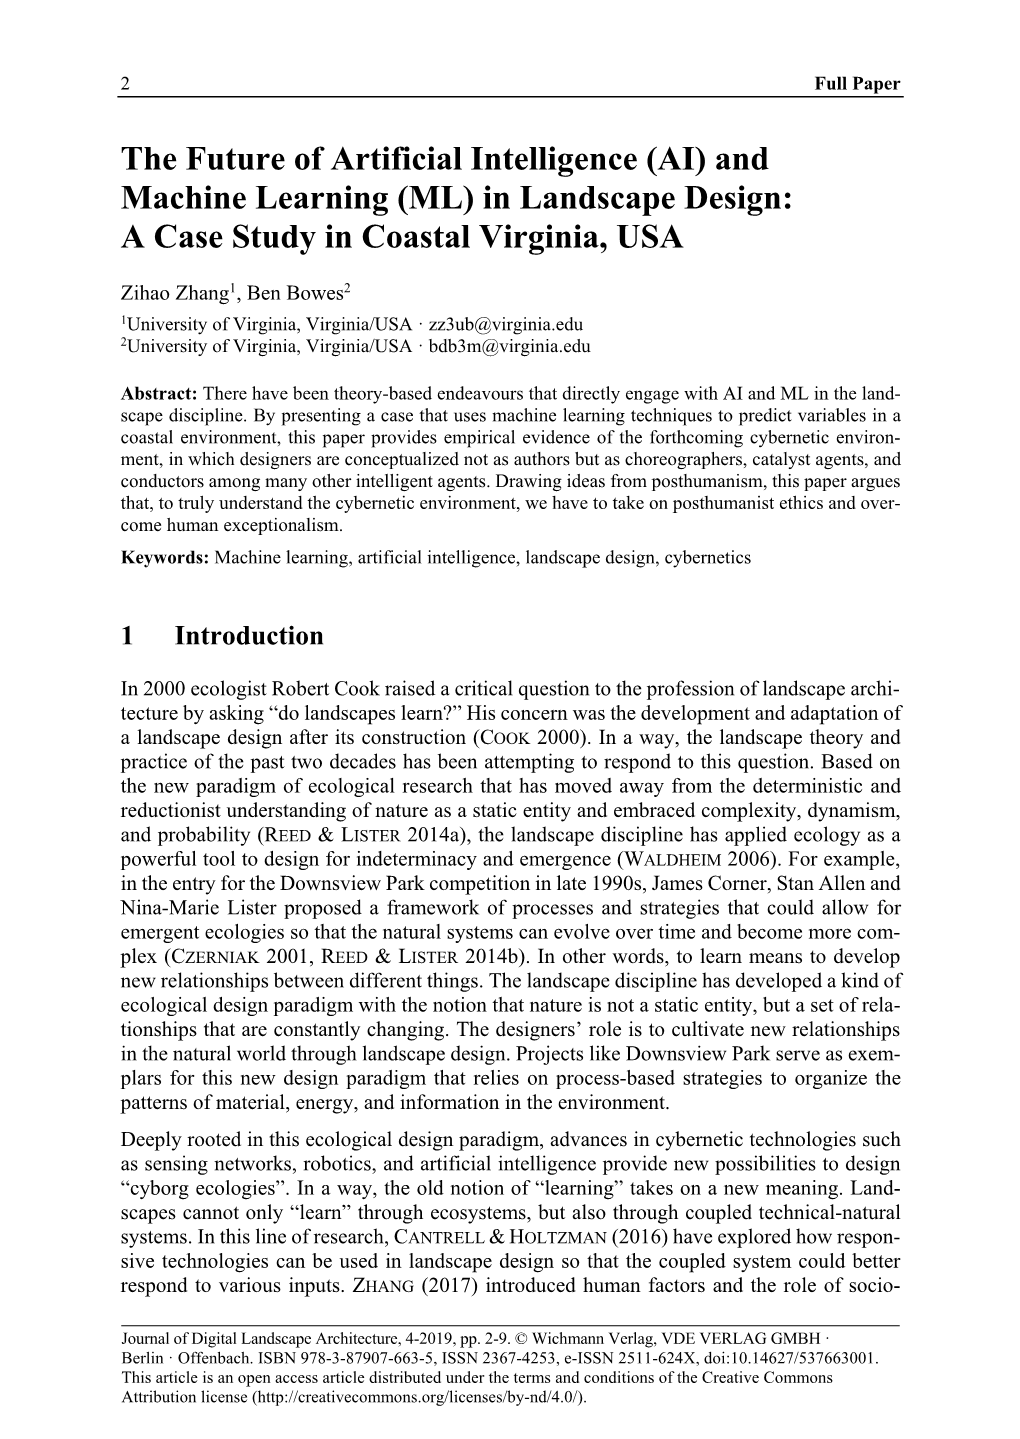 (AI) and Machine Learning (ML) in Landscape Design: a Case Study in Coastal Virginia, USA